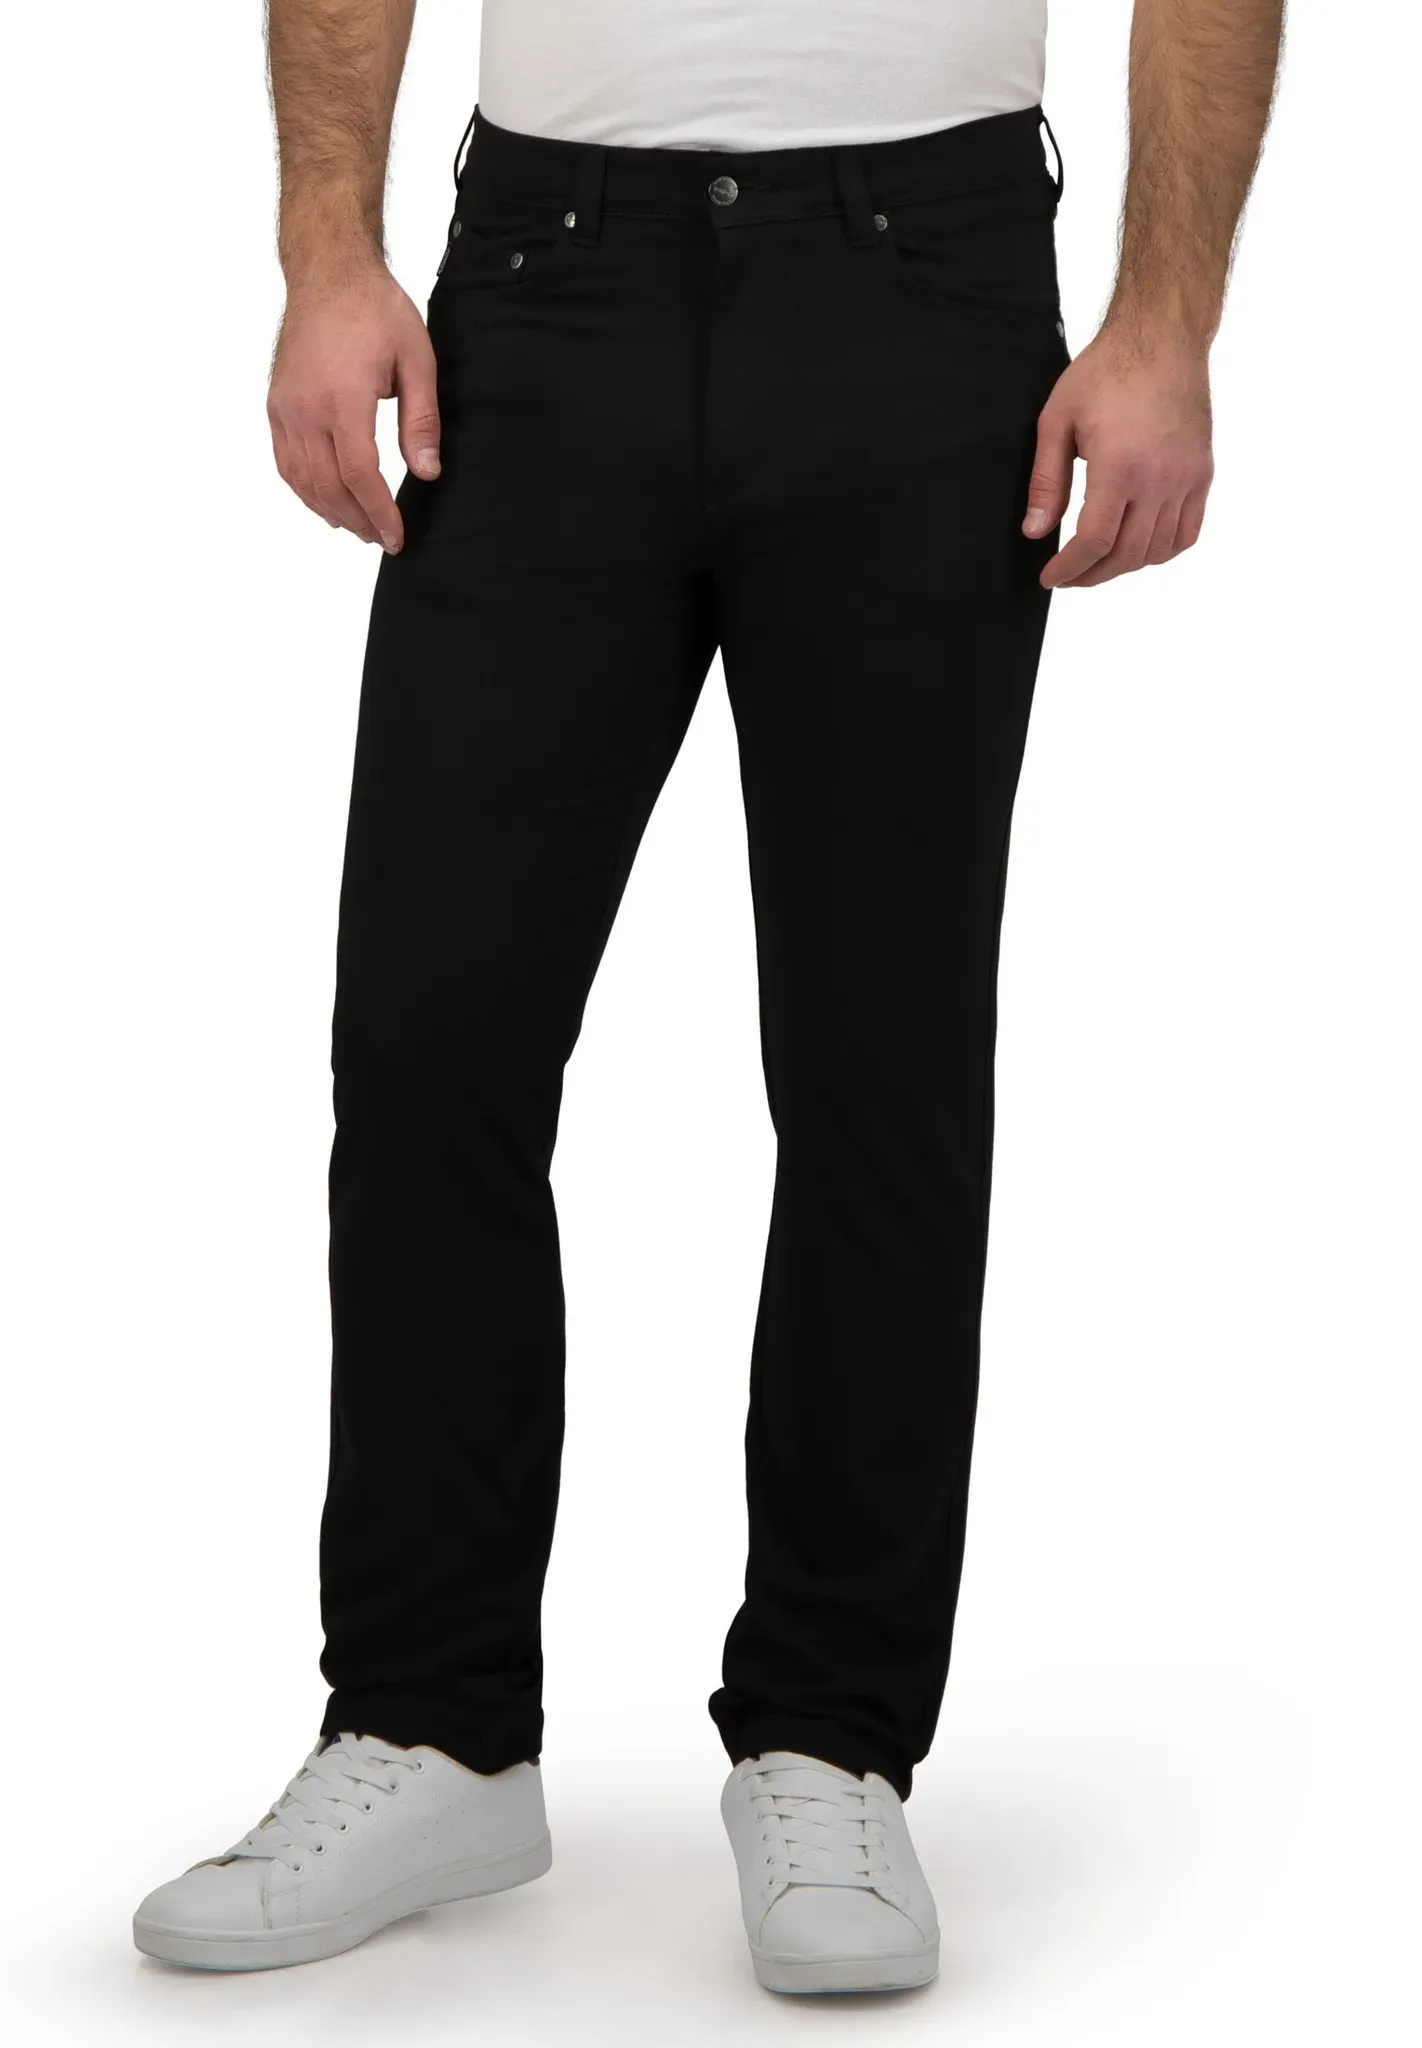 Bequeme Jeans BRÜHL "Genua III 1" Gr. 32, EURO-Größen, schwarz Herren Jeans 5-Pocket-Jeans Straight-fit-Jeans Stretchjeans Stretch